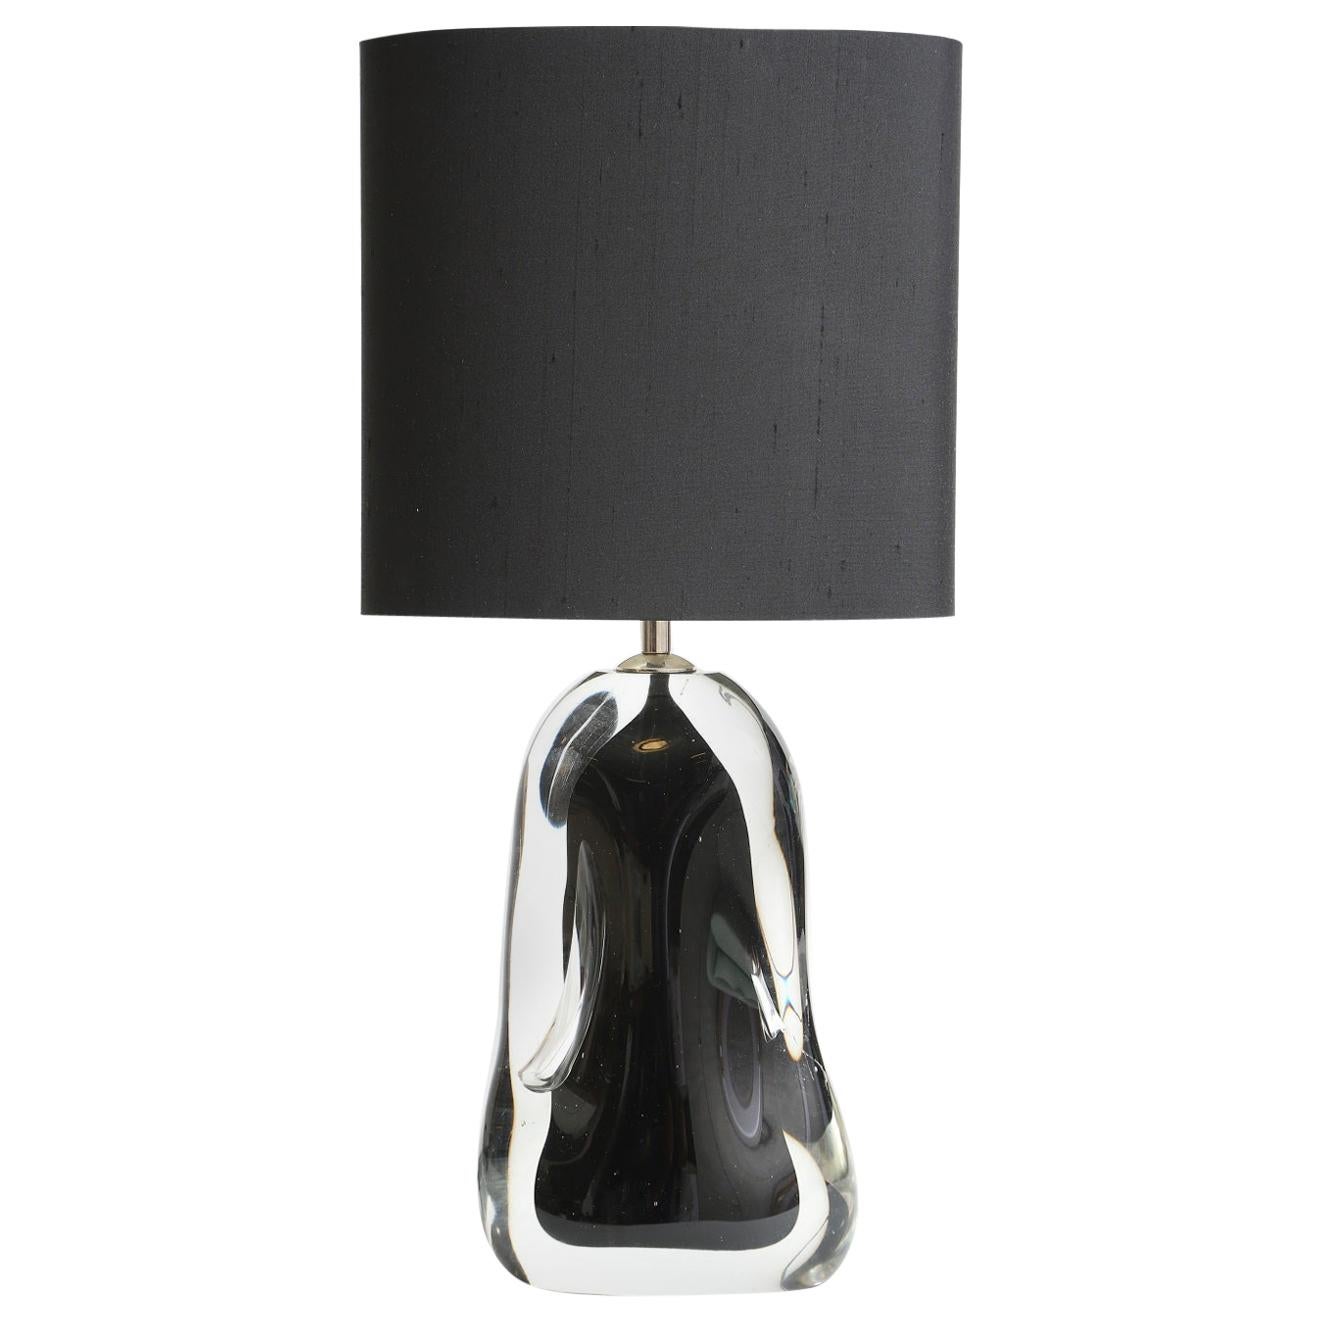 Perfume Bottle Table Lamp in Black by Porta Romana For Sale